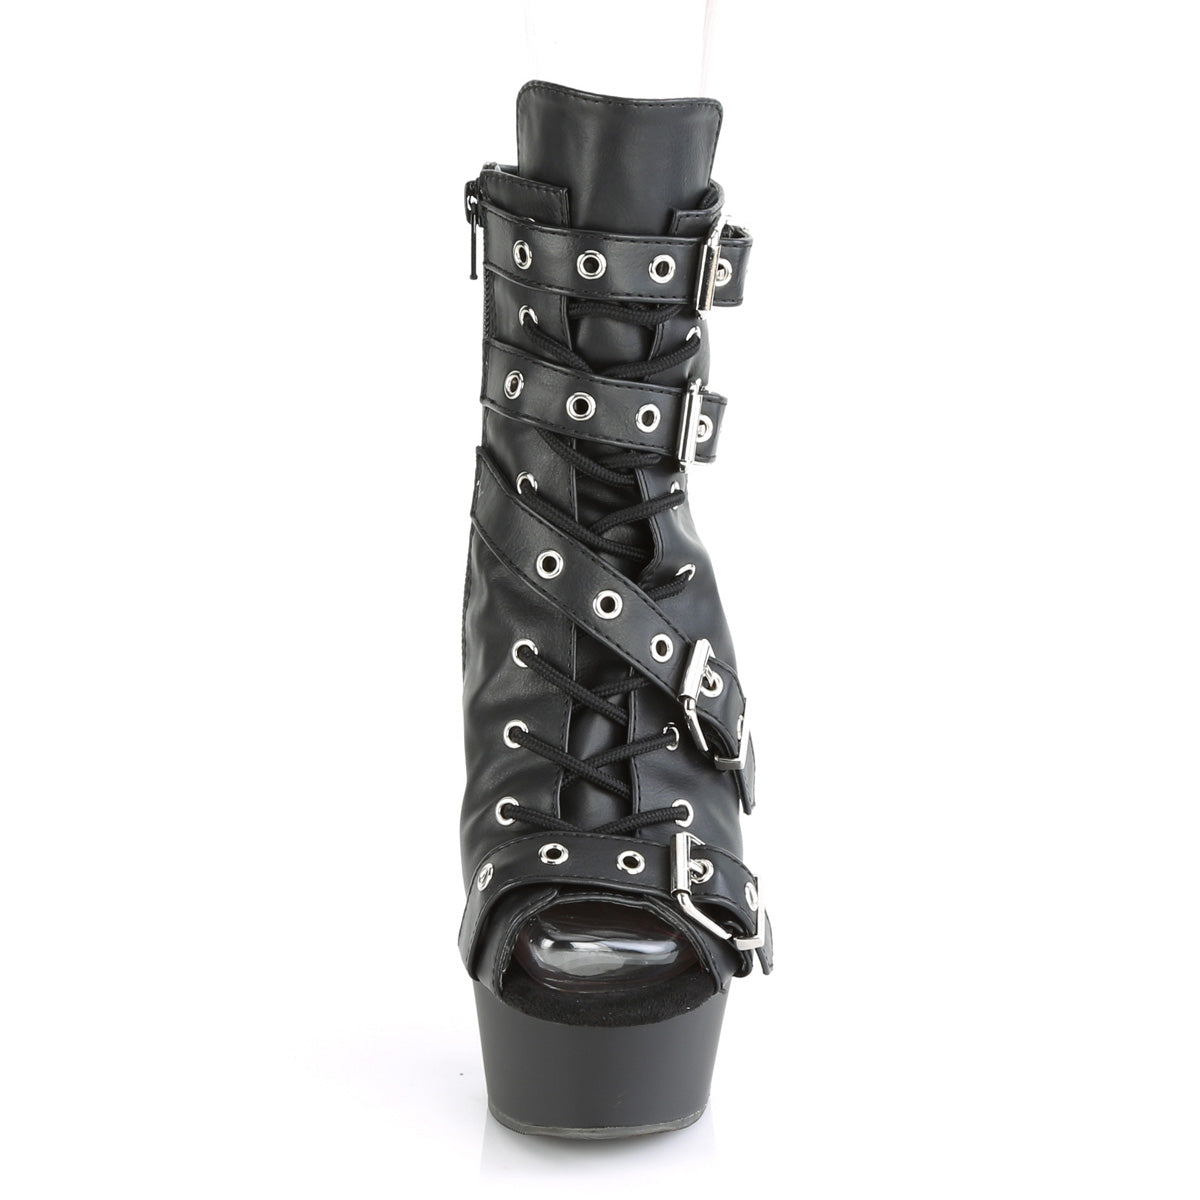 DELIGHT-600-19 Pleaser 6" Heel Black Pole Dancing -Pleaser- Sexy Shoes Alternative Footwear